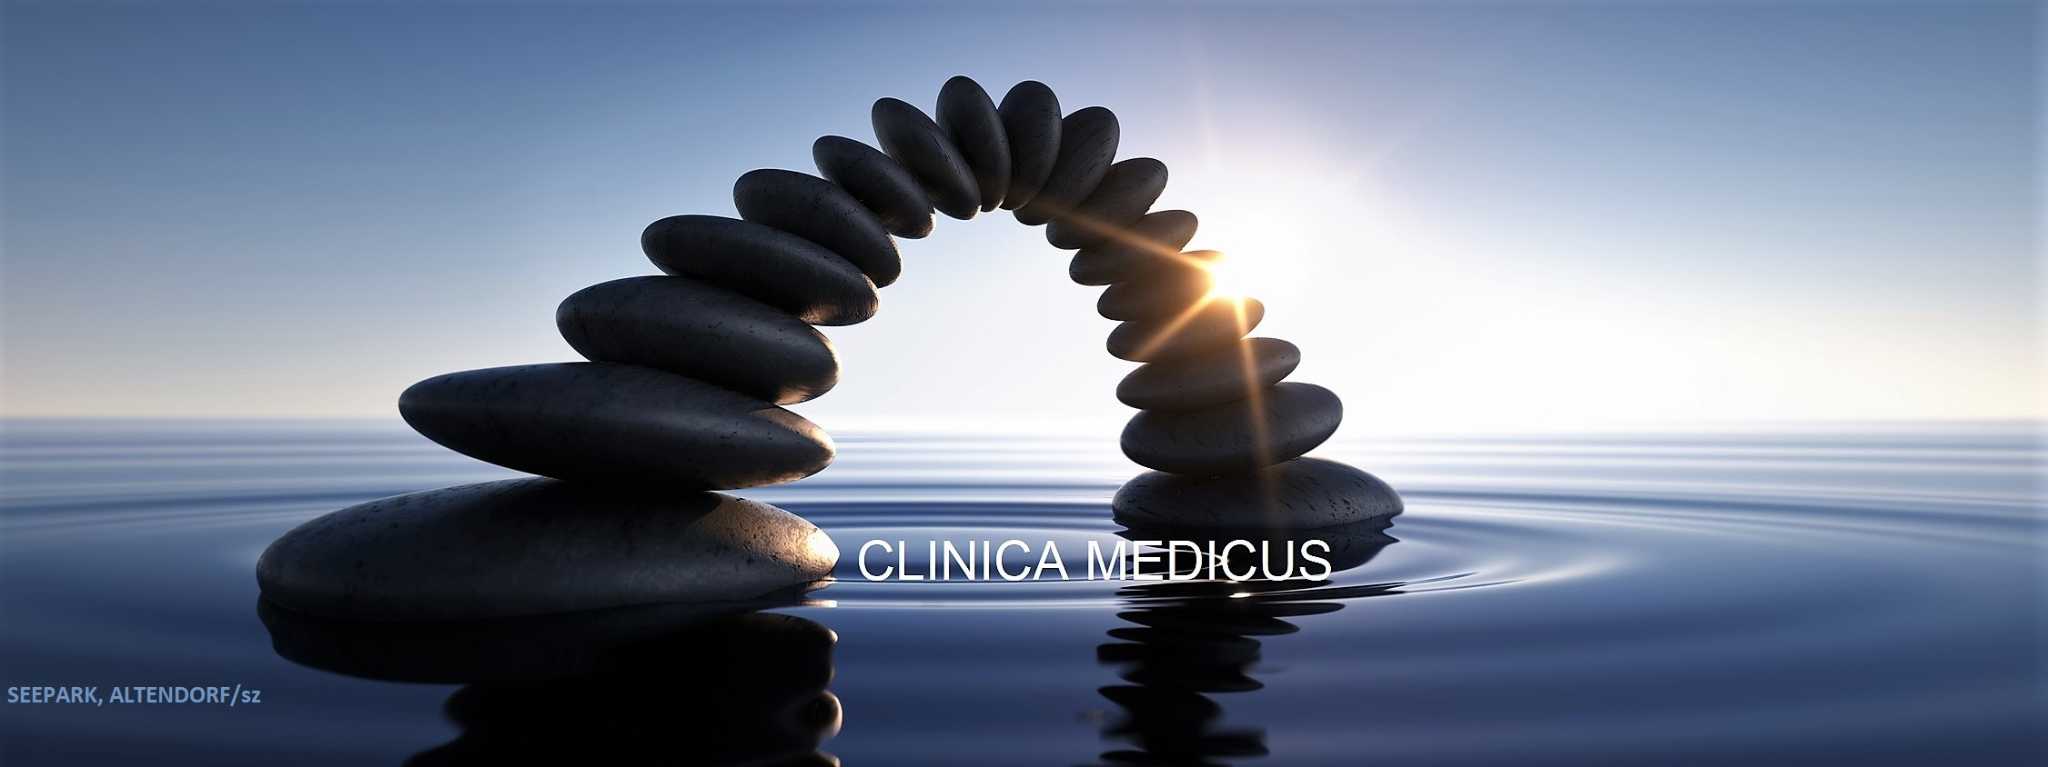 Clinica Medicus Naturalis